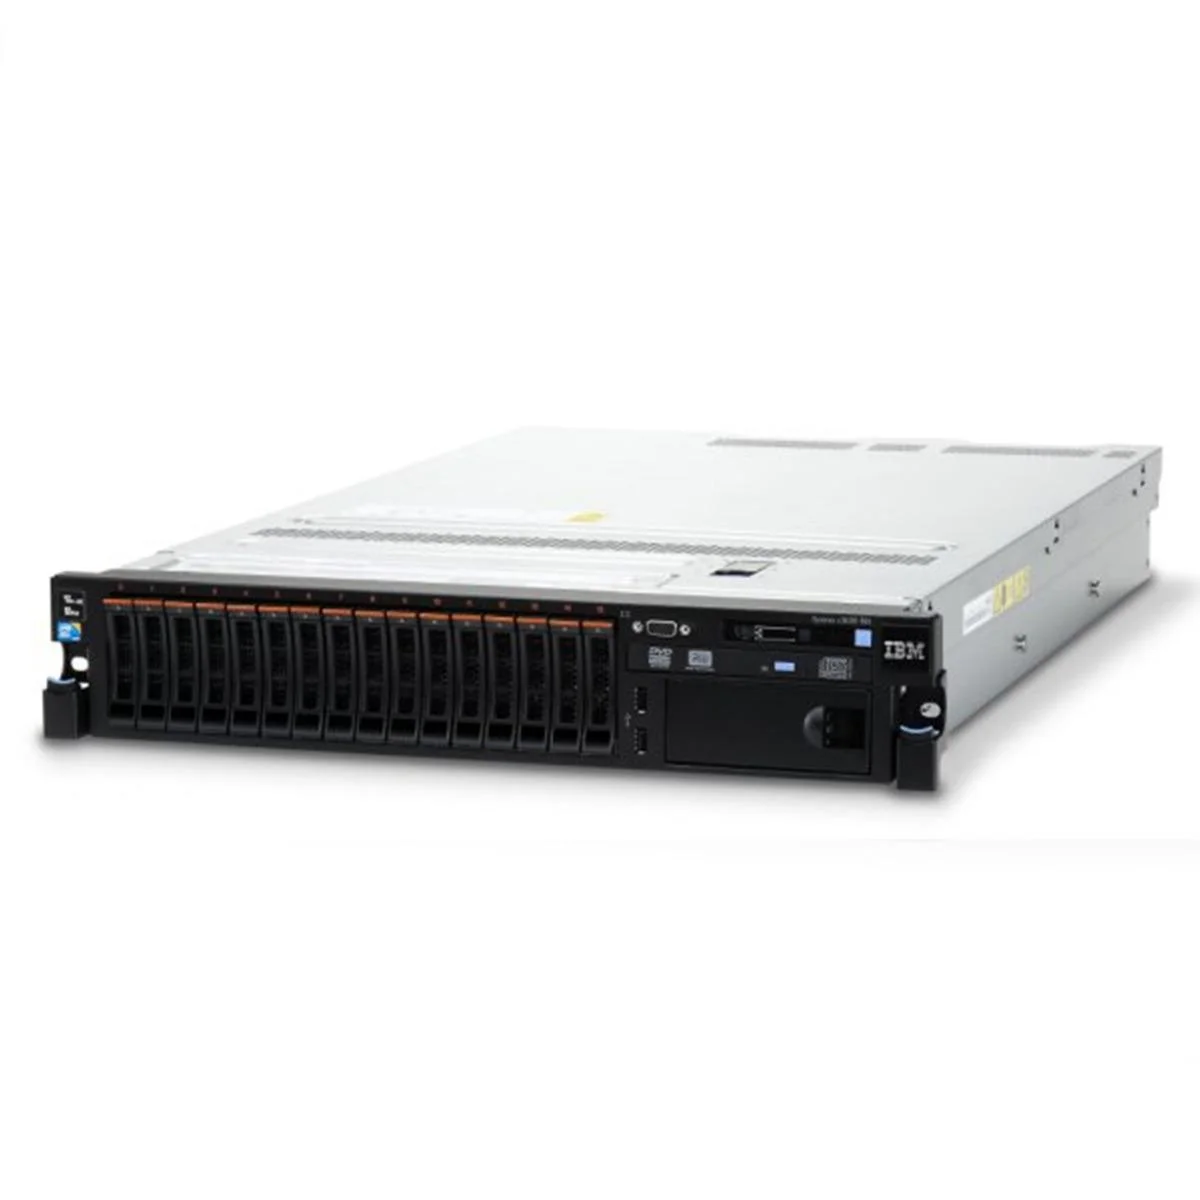 IBM System X3650 M4 2U Rack Server